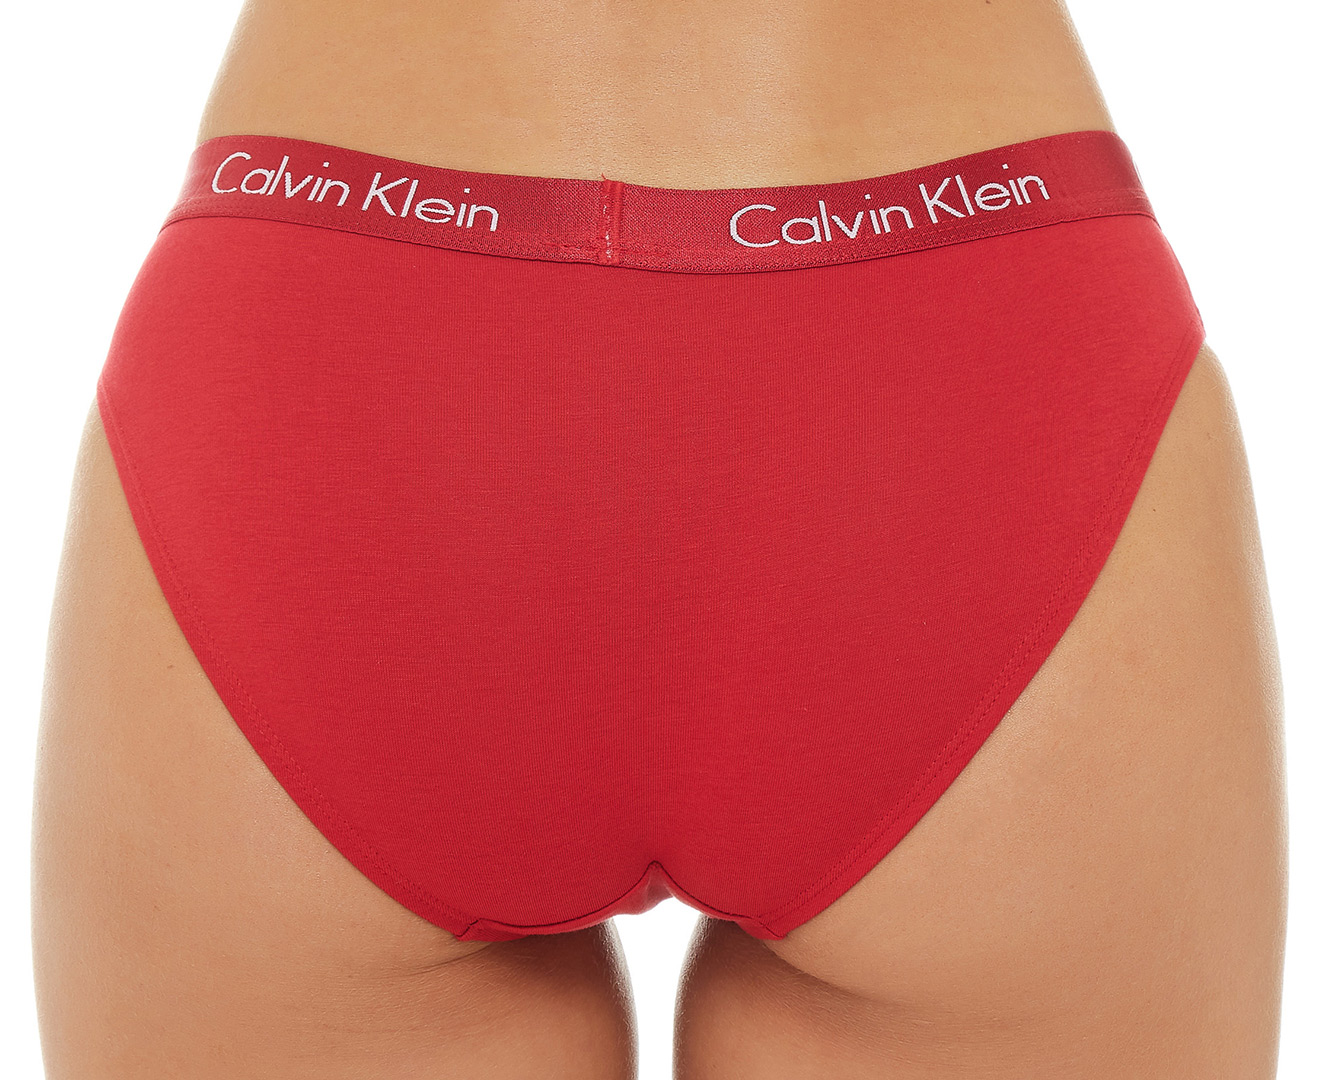 CALVIN KLEIN Radiant Cotton Bikini Knickers, Pack Of 3 in Multi